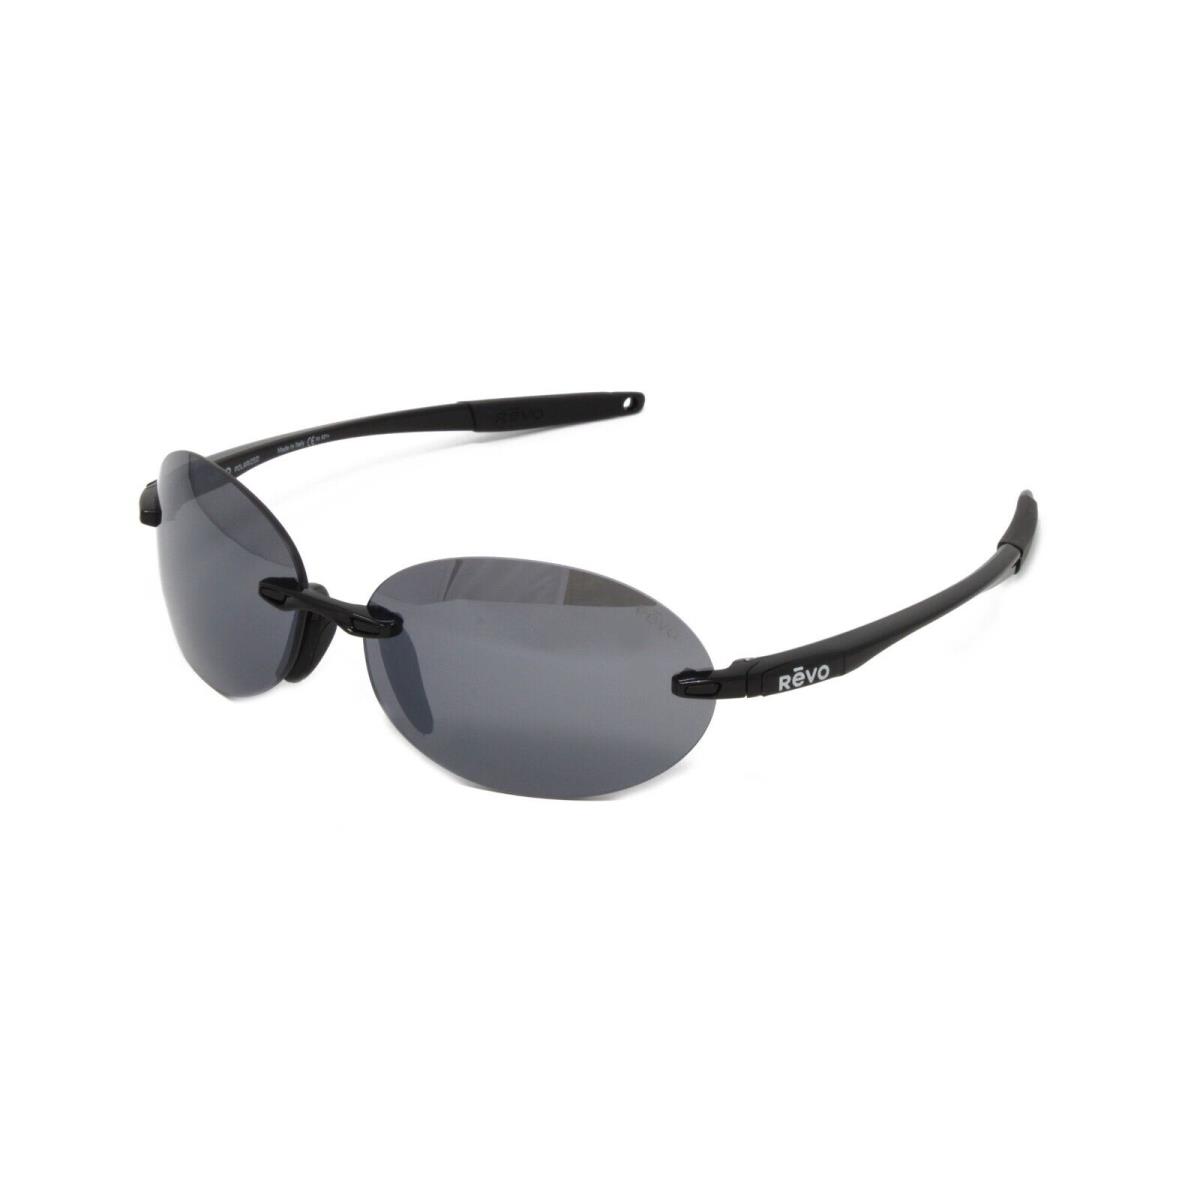 Revo Sunglasses Descend O RE1168 01GY Black Graphite Polarized Lens 61mm - Black Frame, Gray Lens